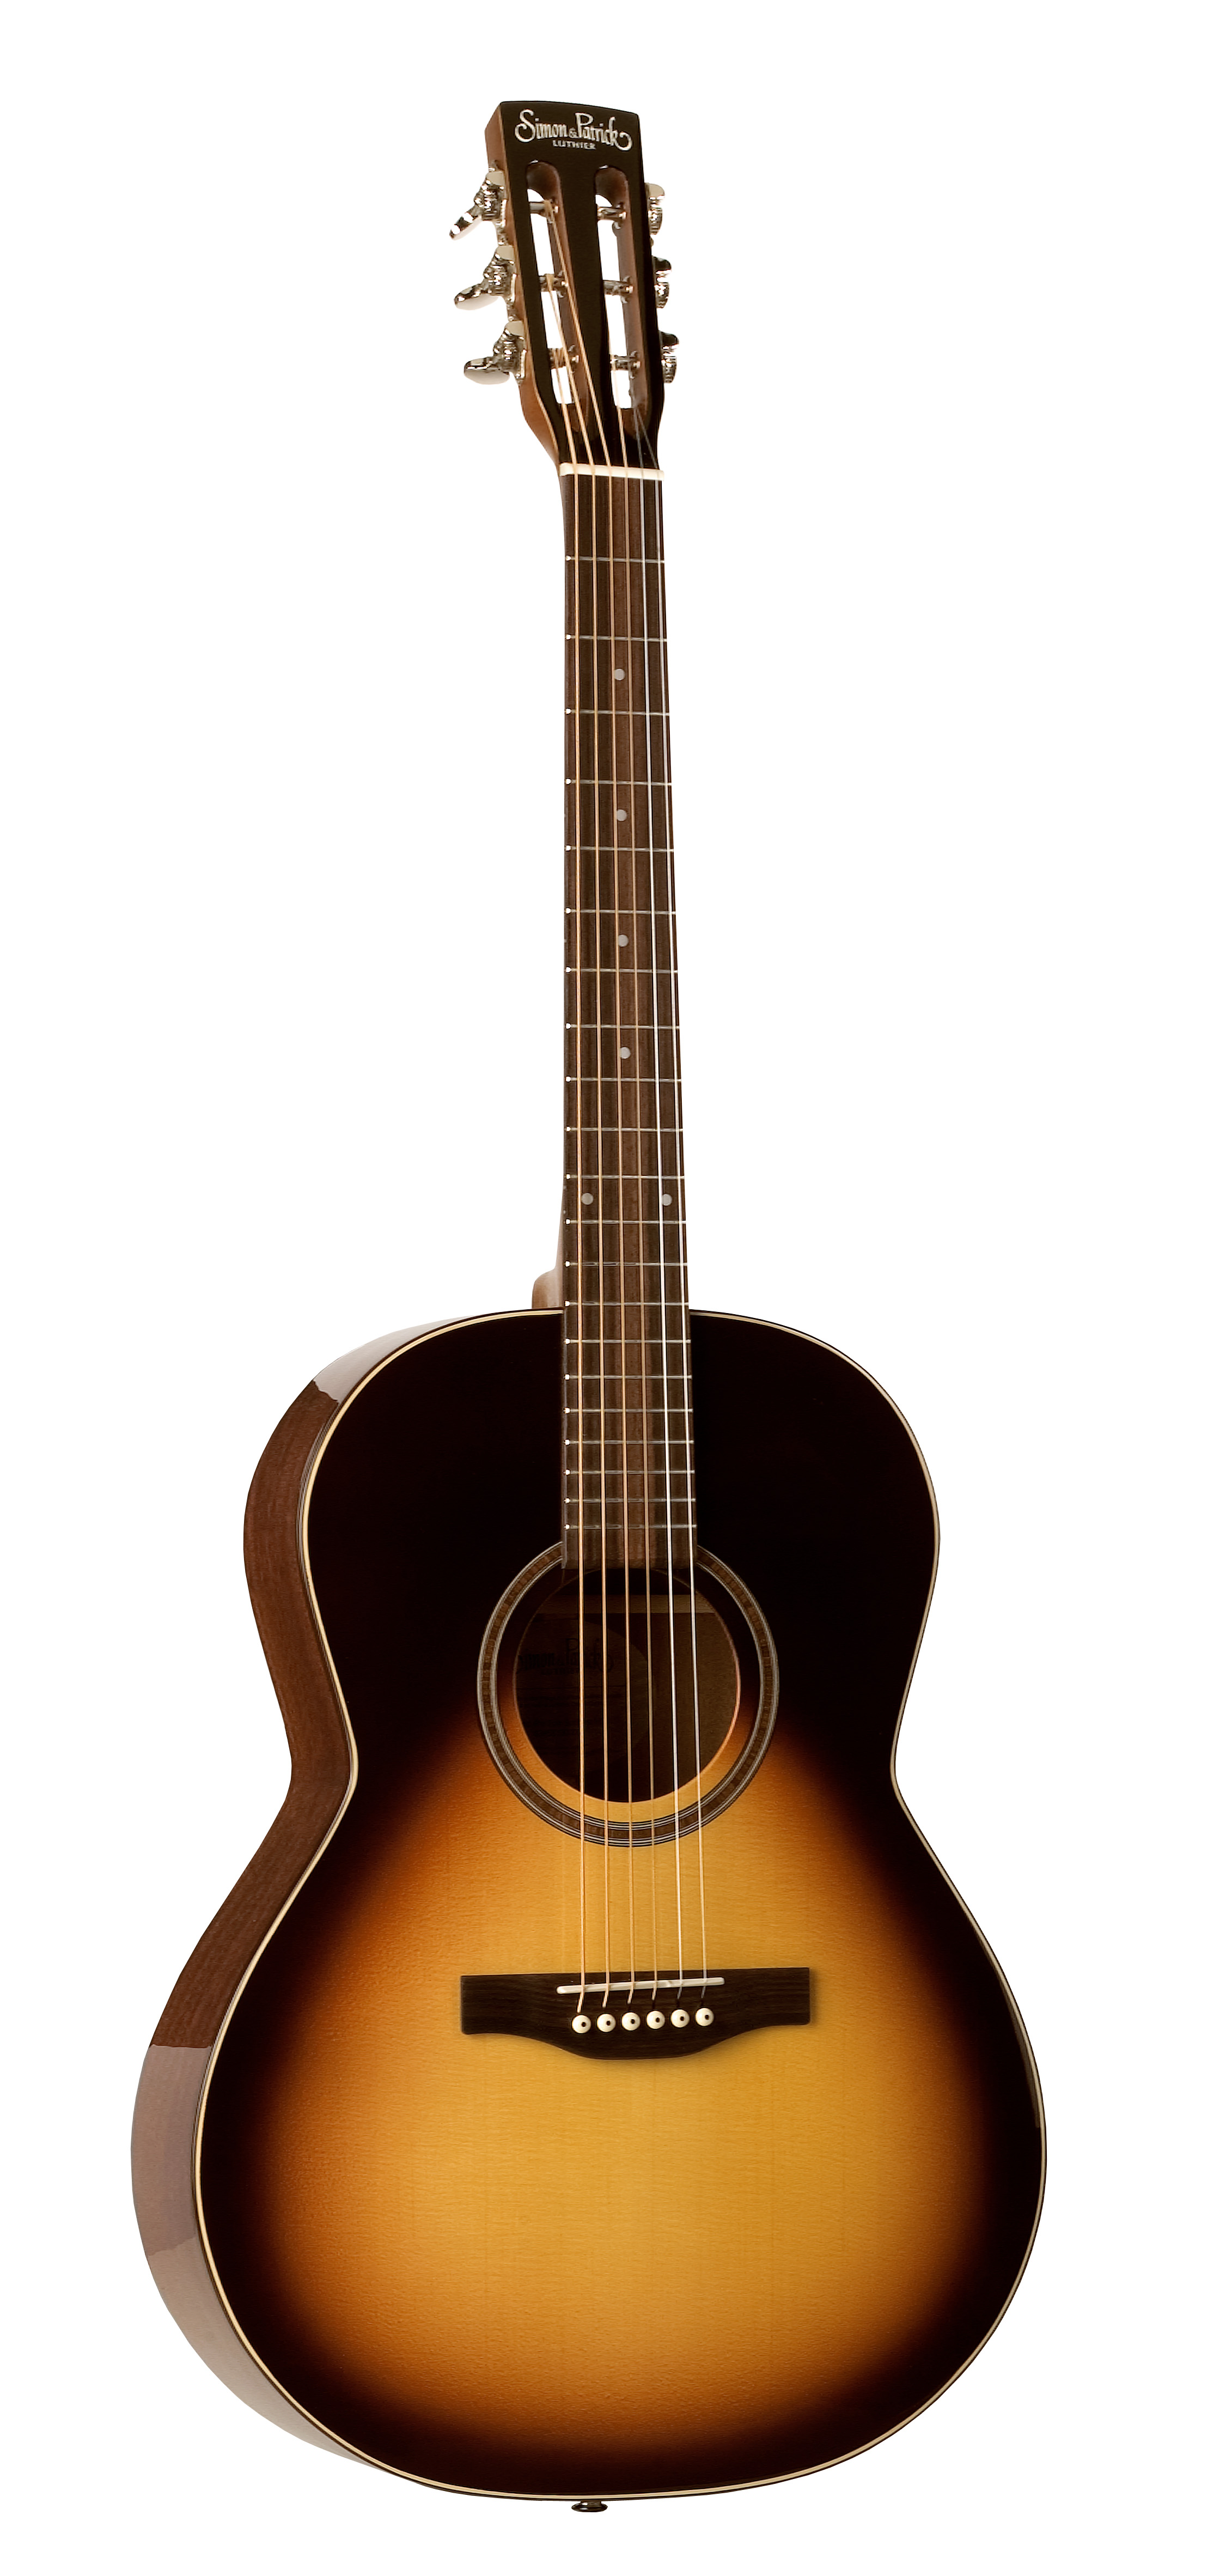 Simon & Patrick 34598 Woodland Pro Folk Sunburst Acoustic Guitar